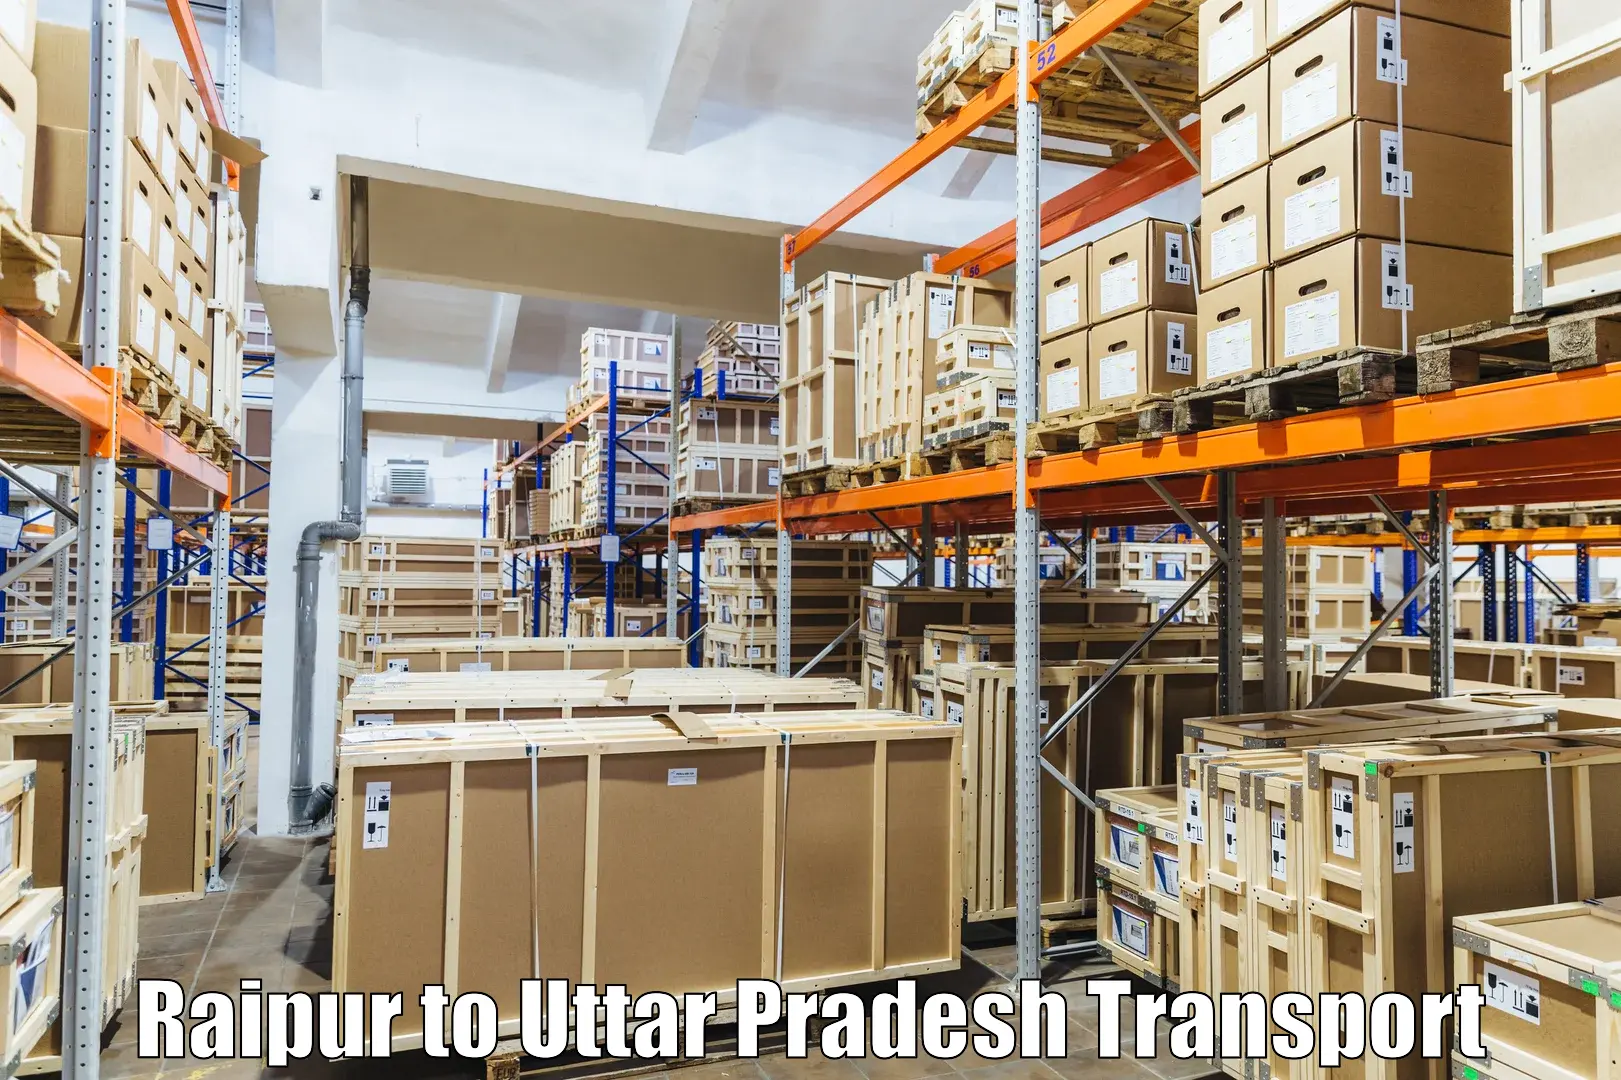 Online transport service Raipur to Hathras